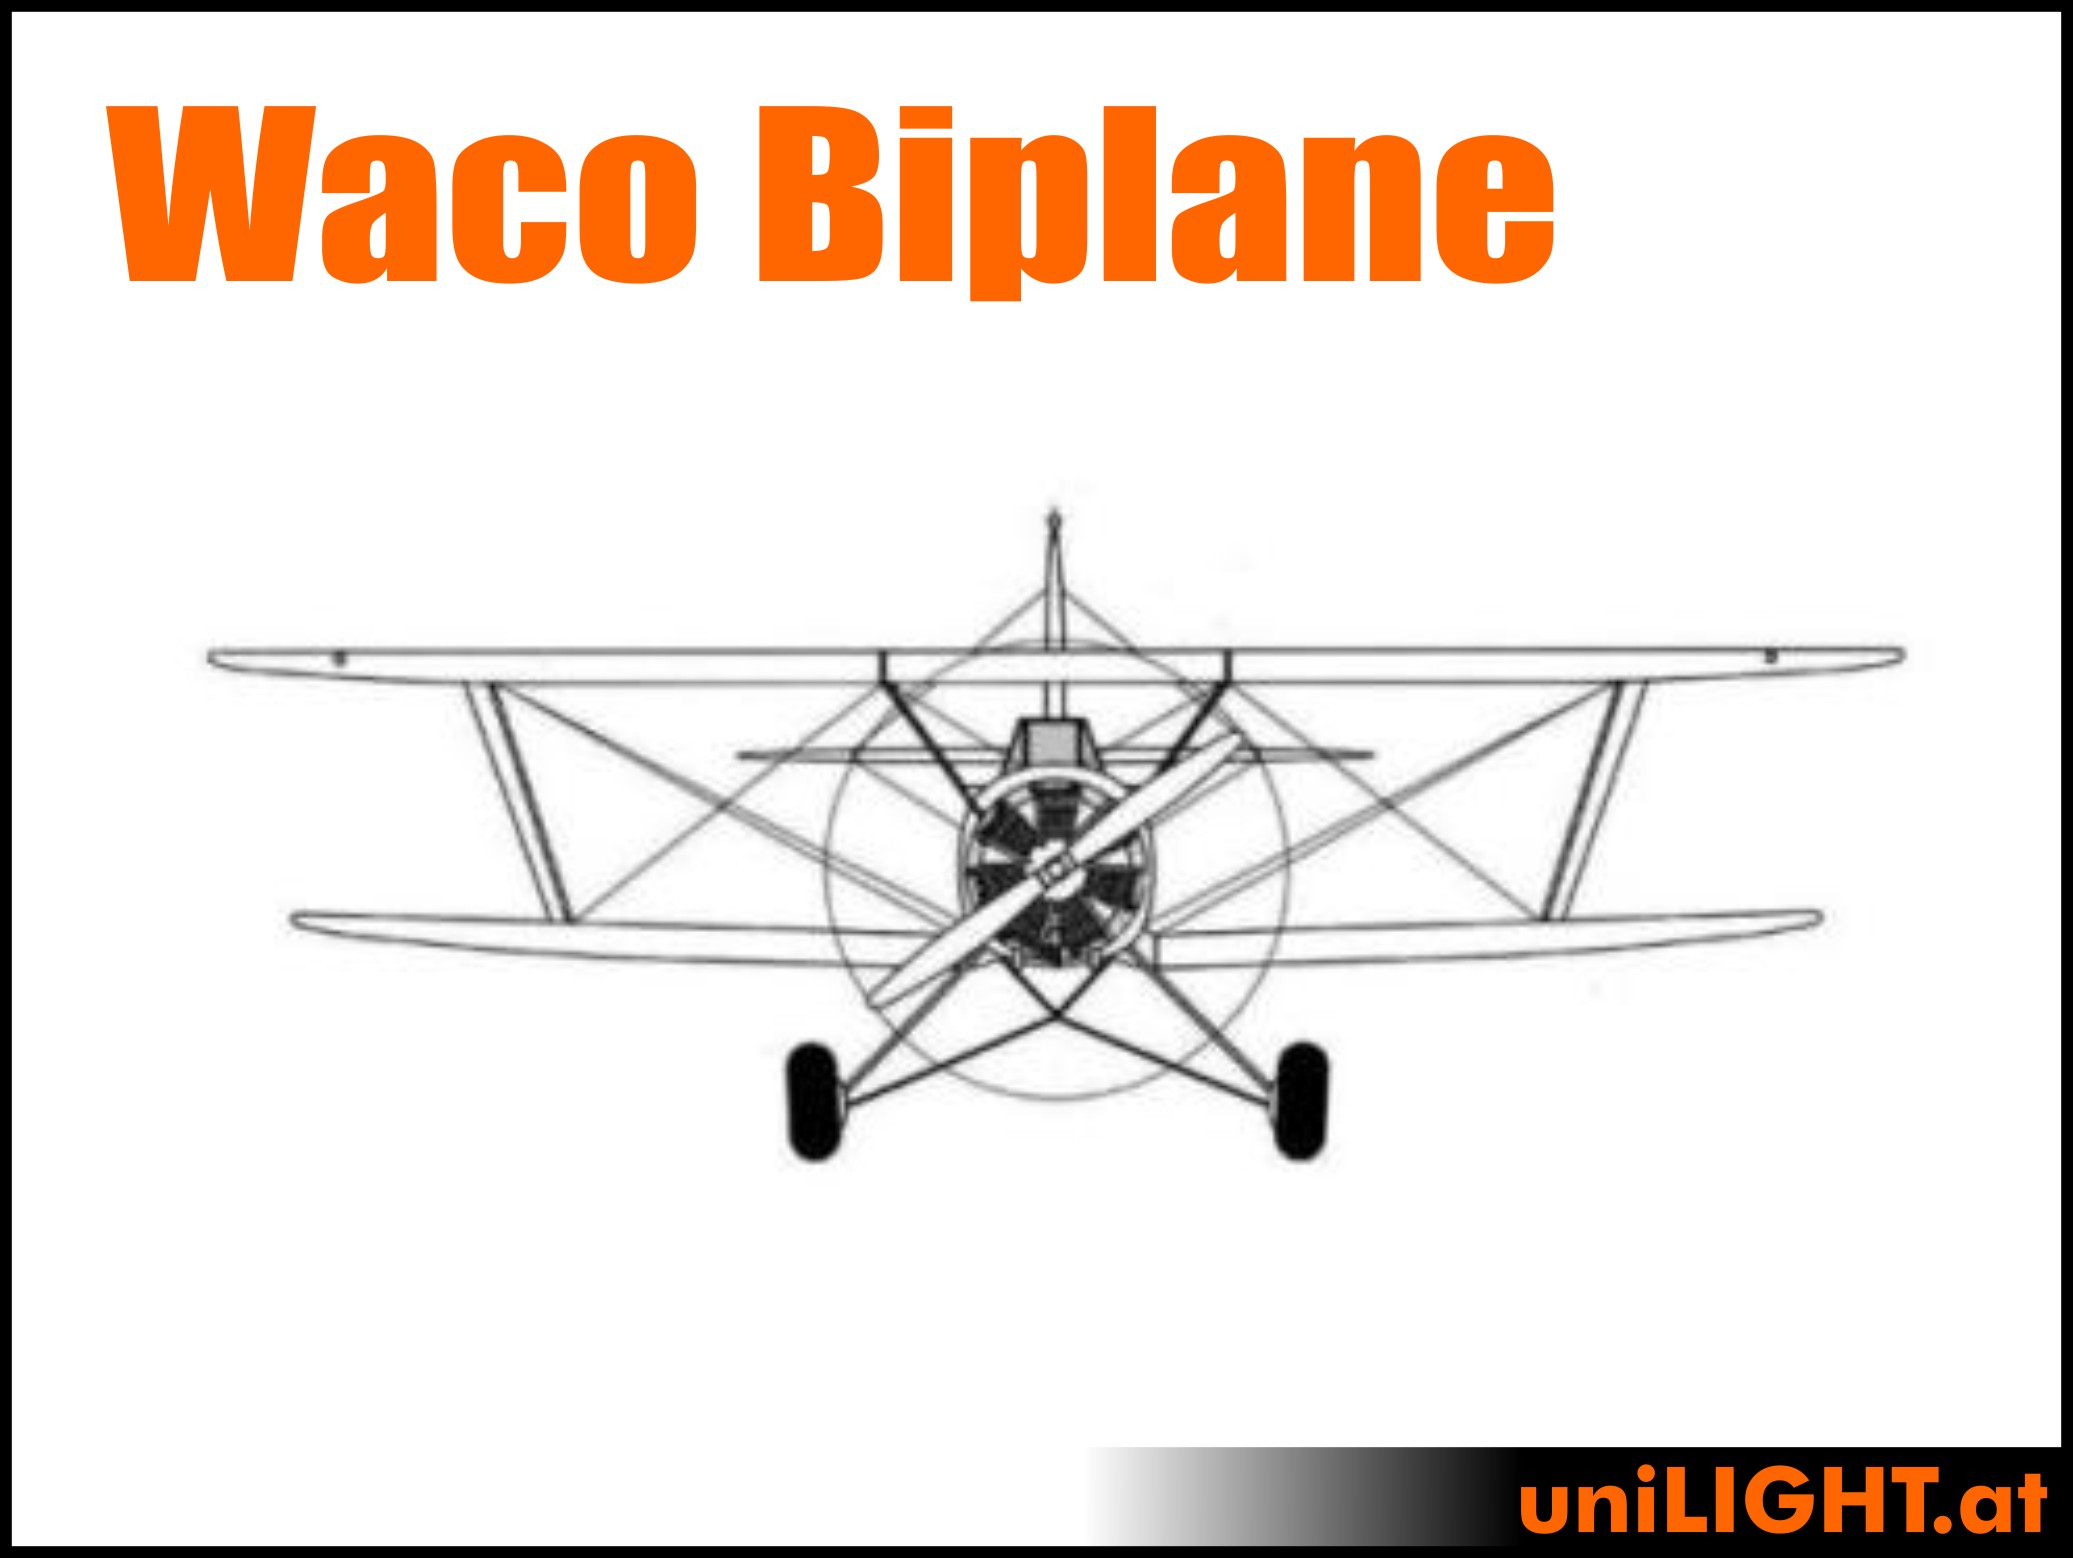 Waco F series Biplane